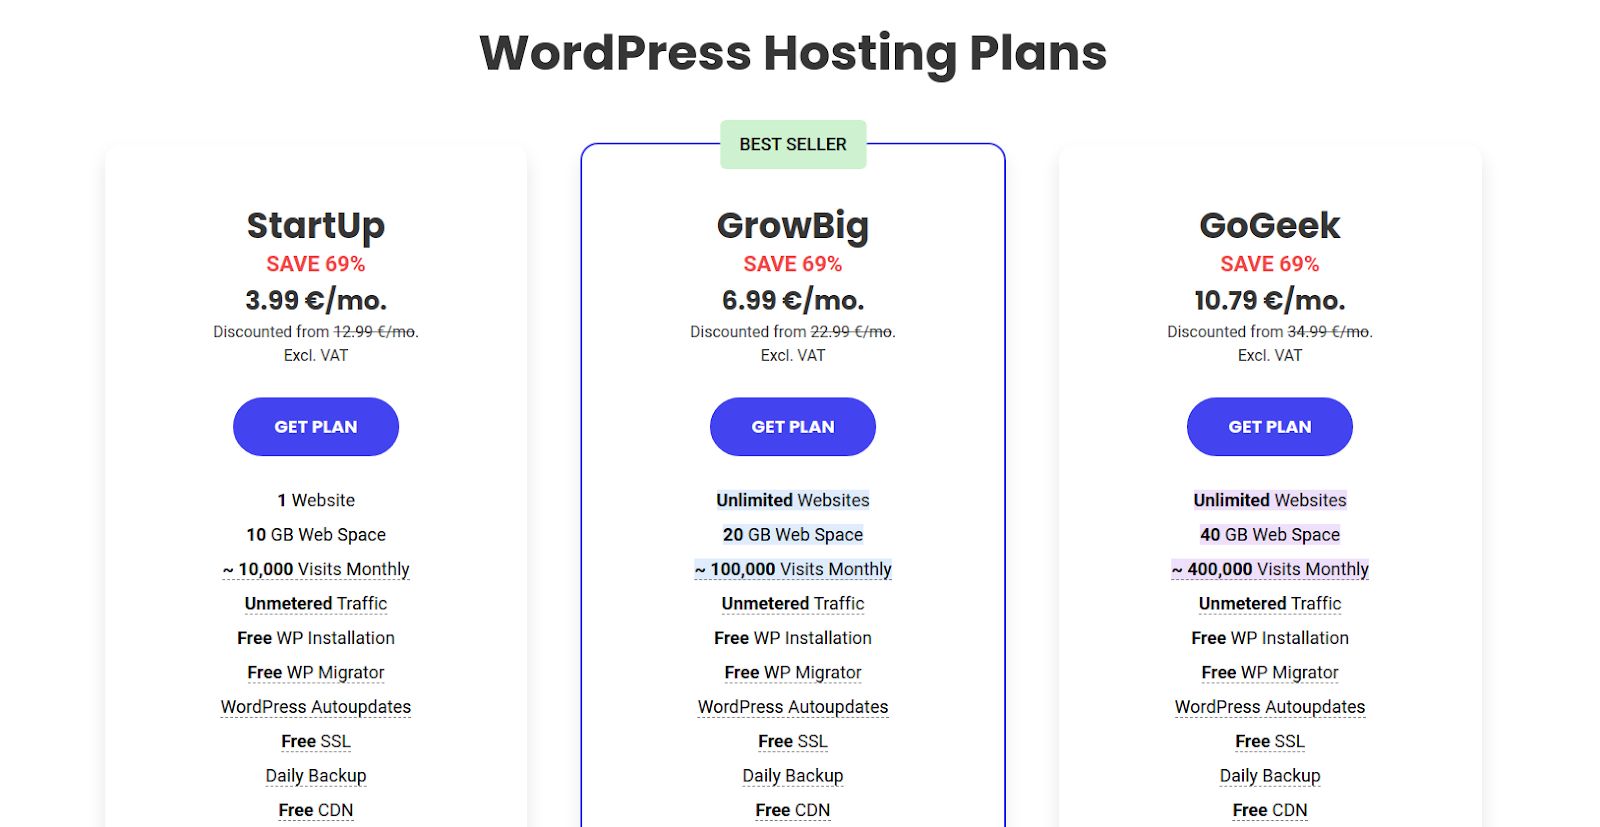 WordPress hosting plans from SiteGround